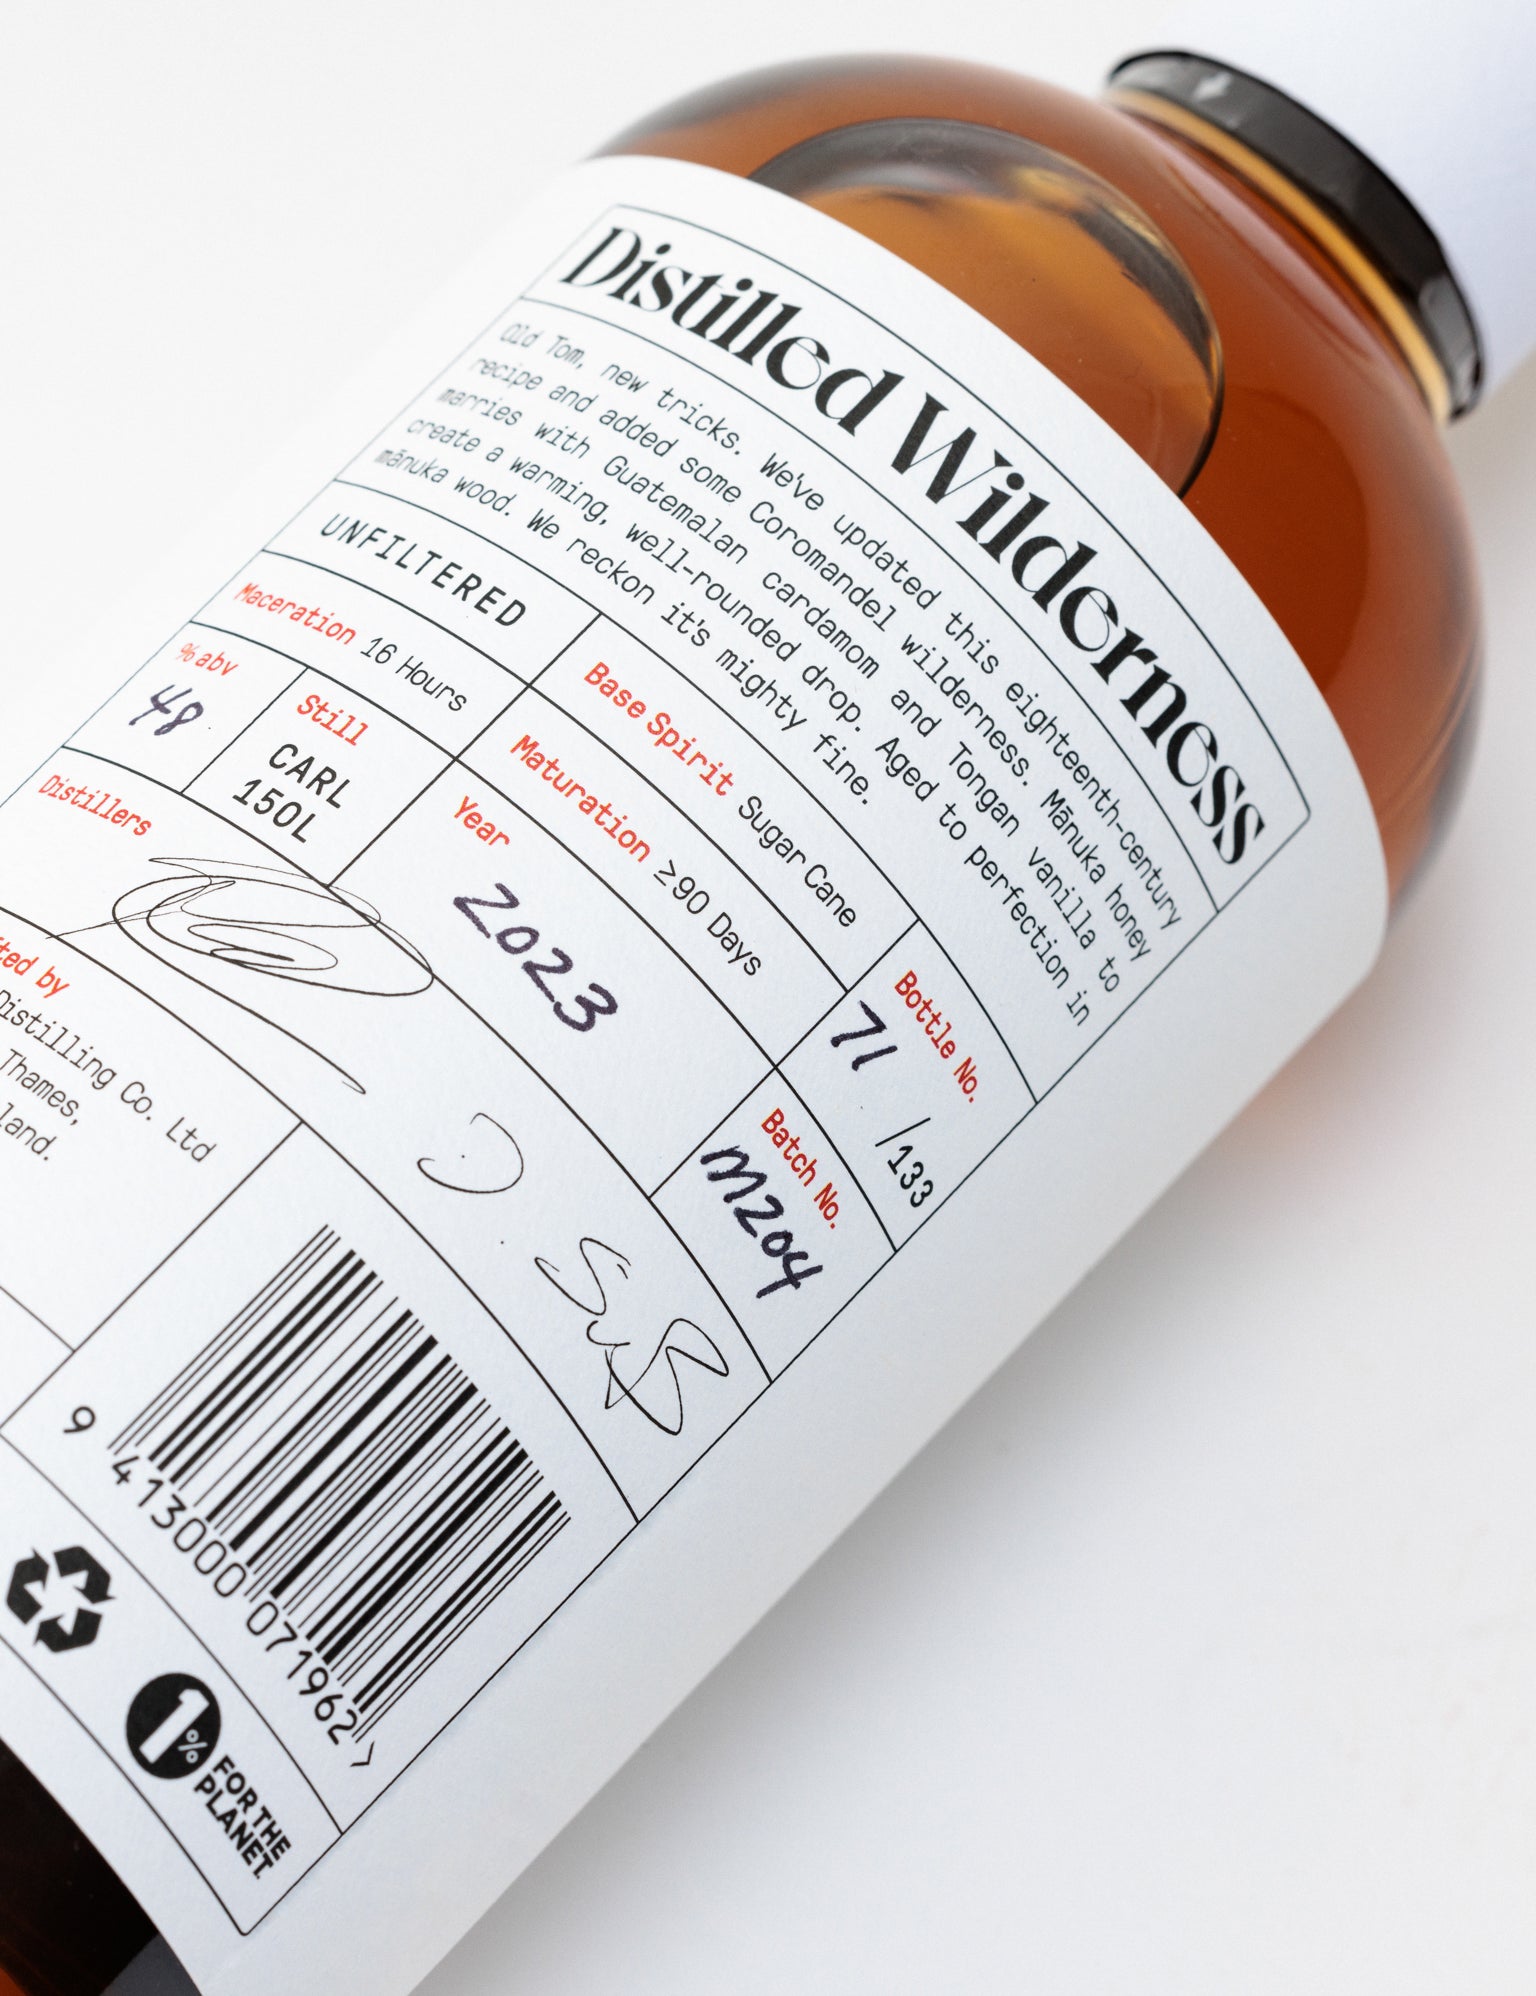 awildian manuka honey gin label details